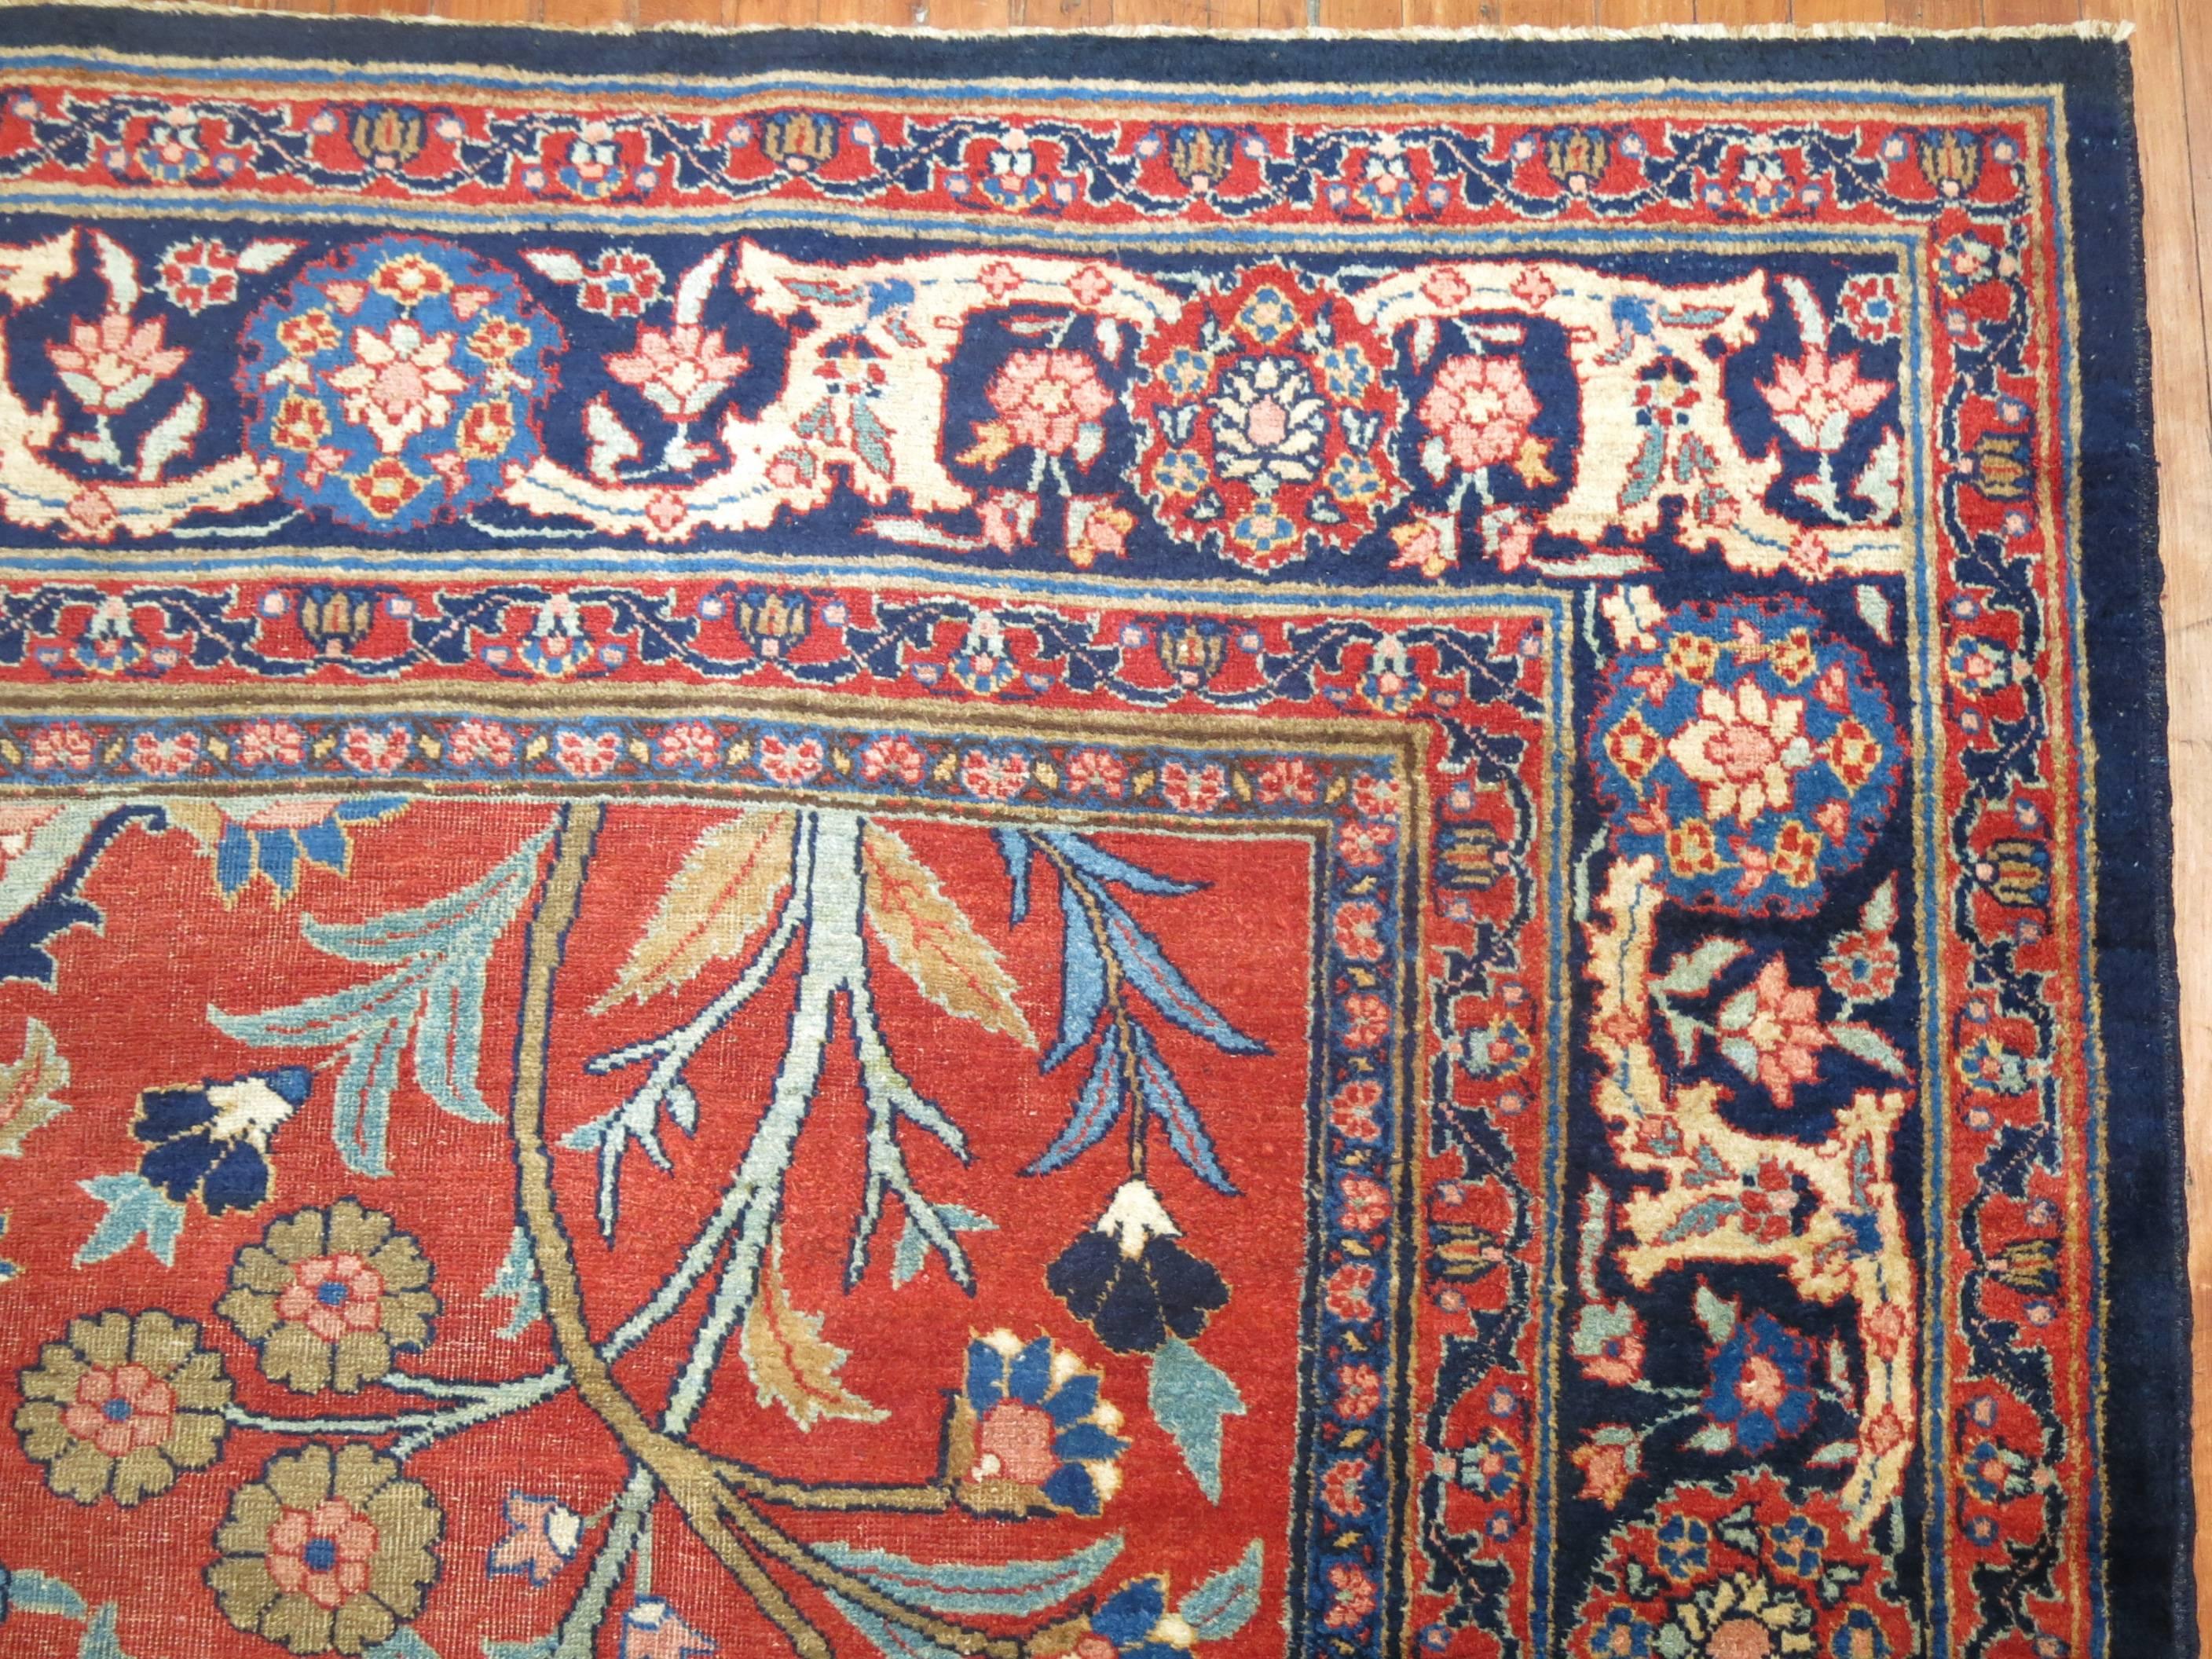 Folk Art Pictorial Antique Persian Tabriz Carpet For Sale